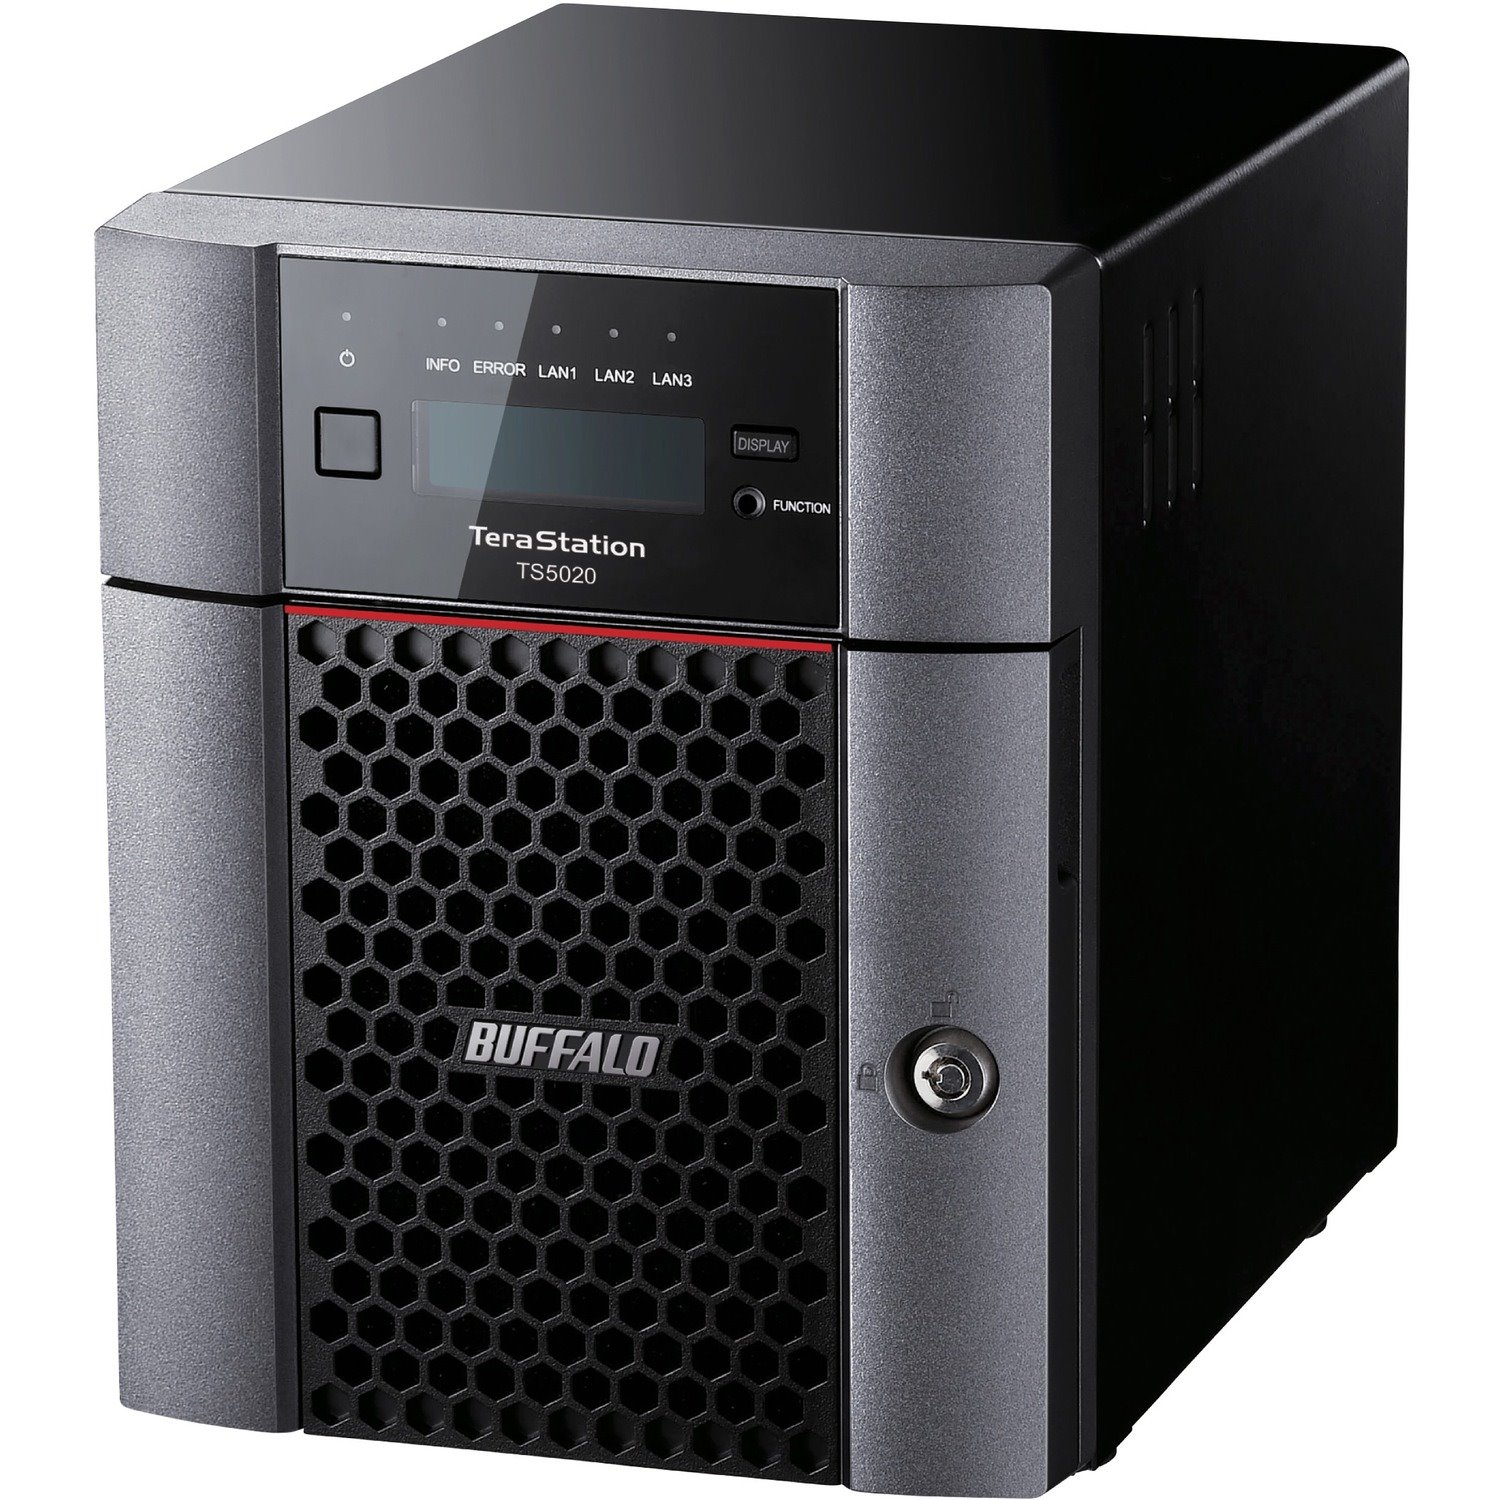 BUFFALO TeraStation 5420 4-Bay 32TB (2x16TB) Business Desktop NAS Storage Hard Drives Included